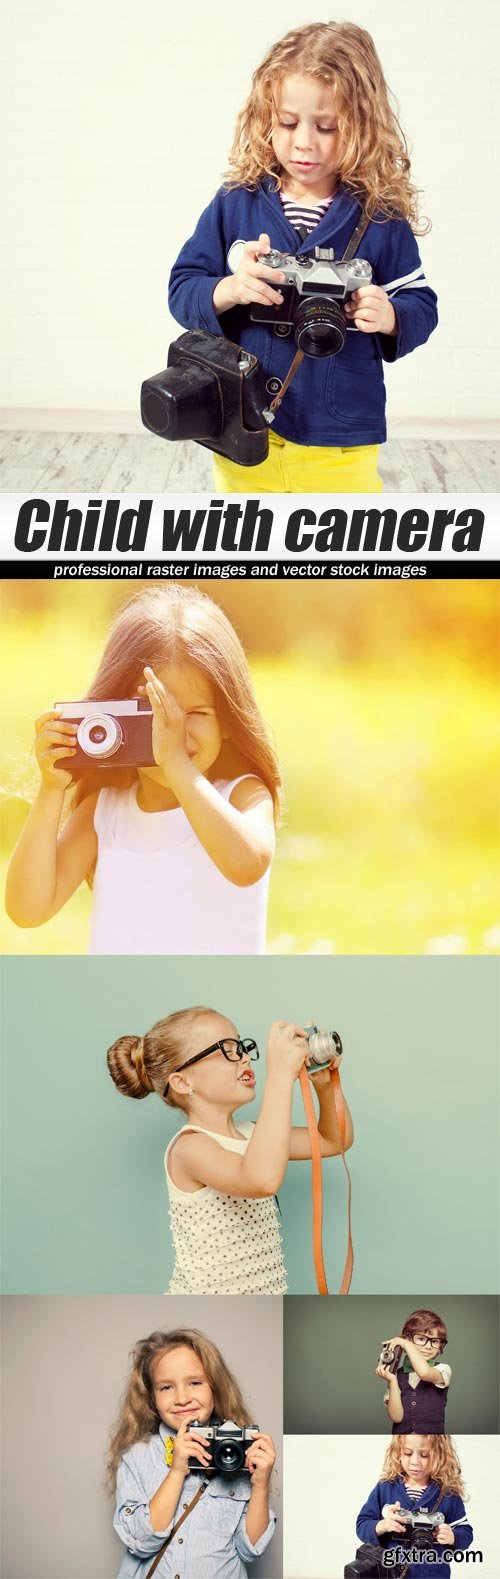 Child with camera